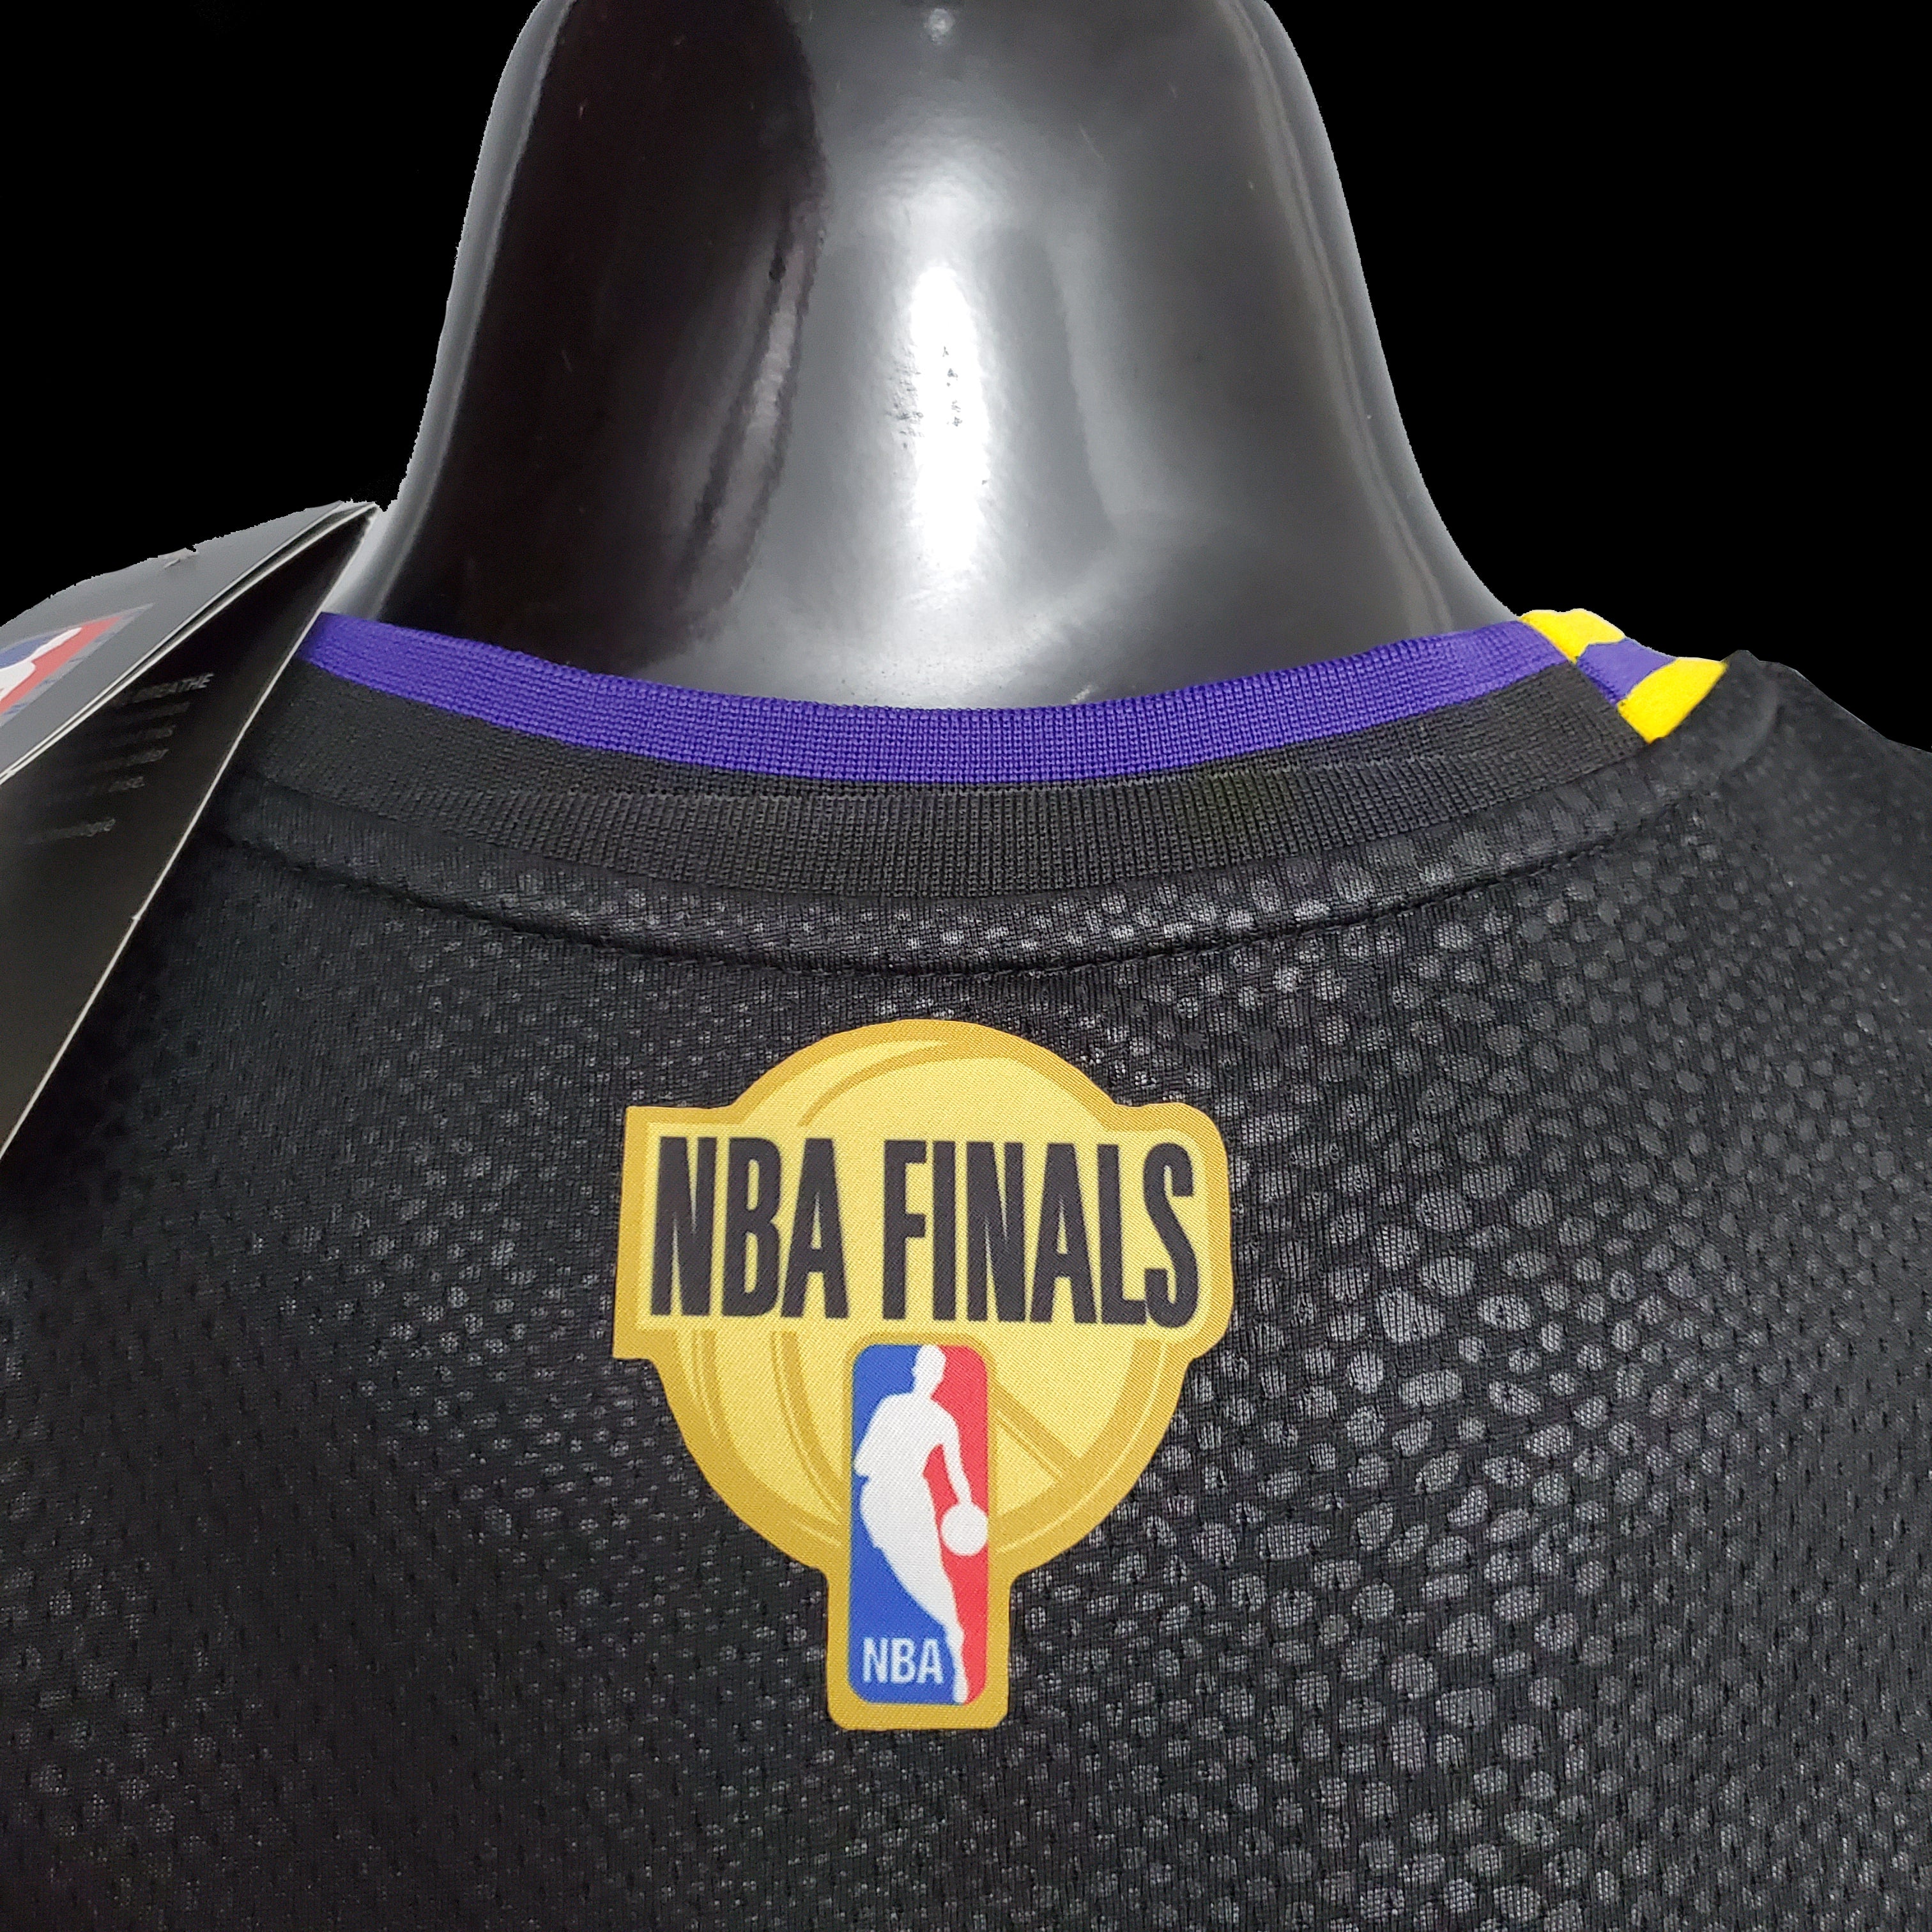 Playoffs Kobe Bryant NBA Shirts for sale